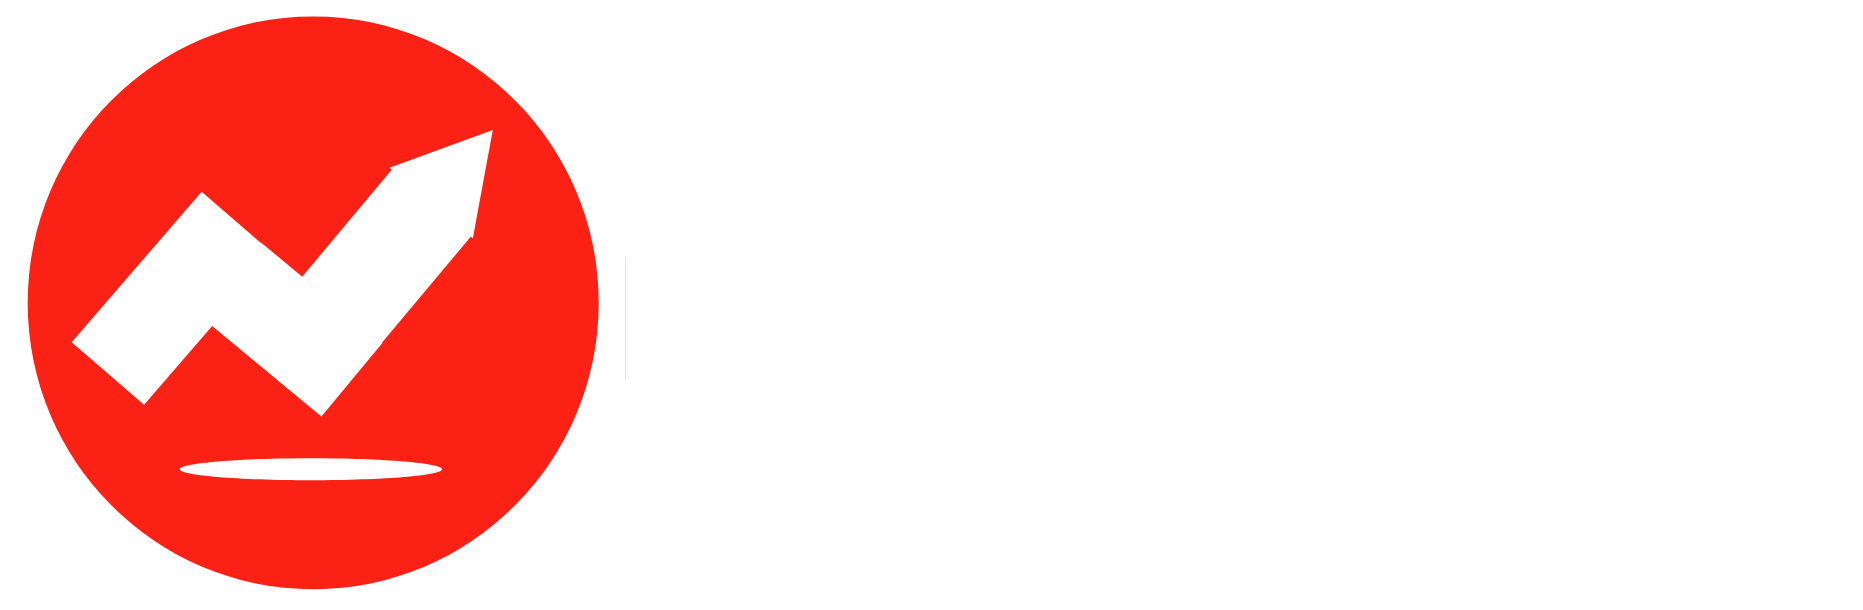 elitetradepro.org